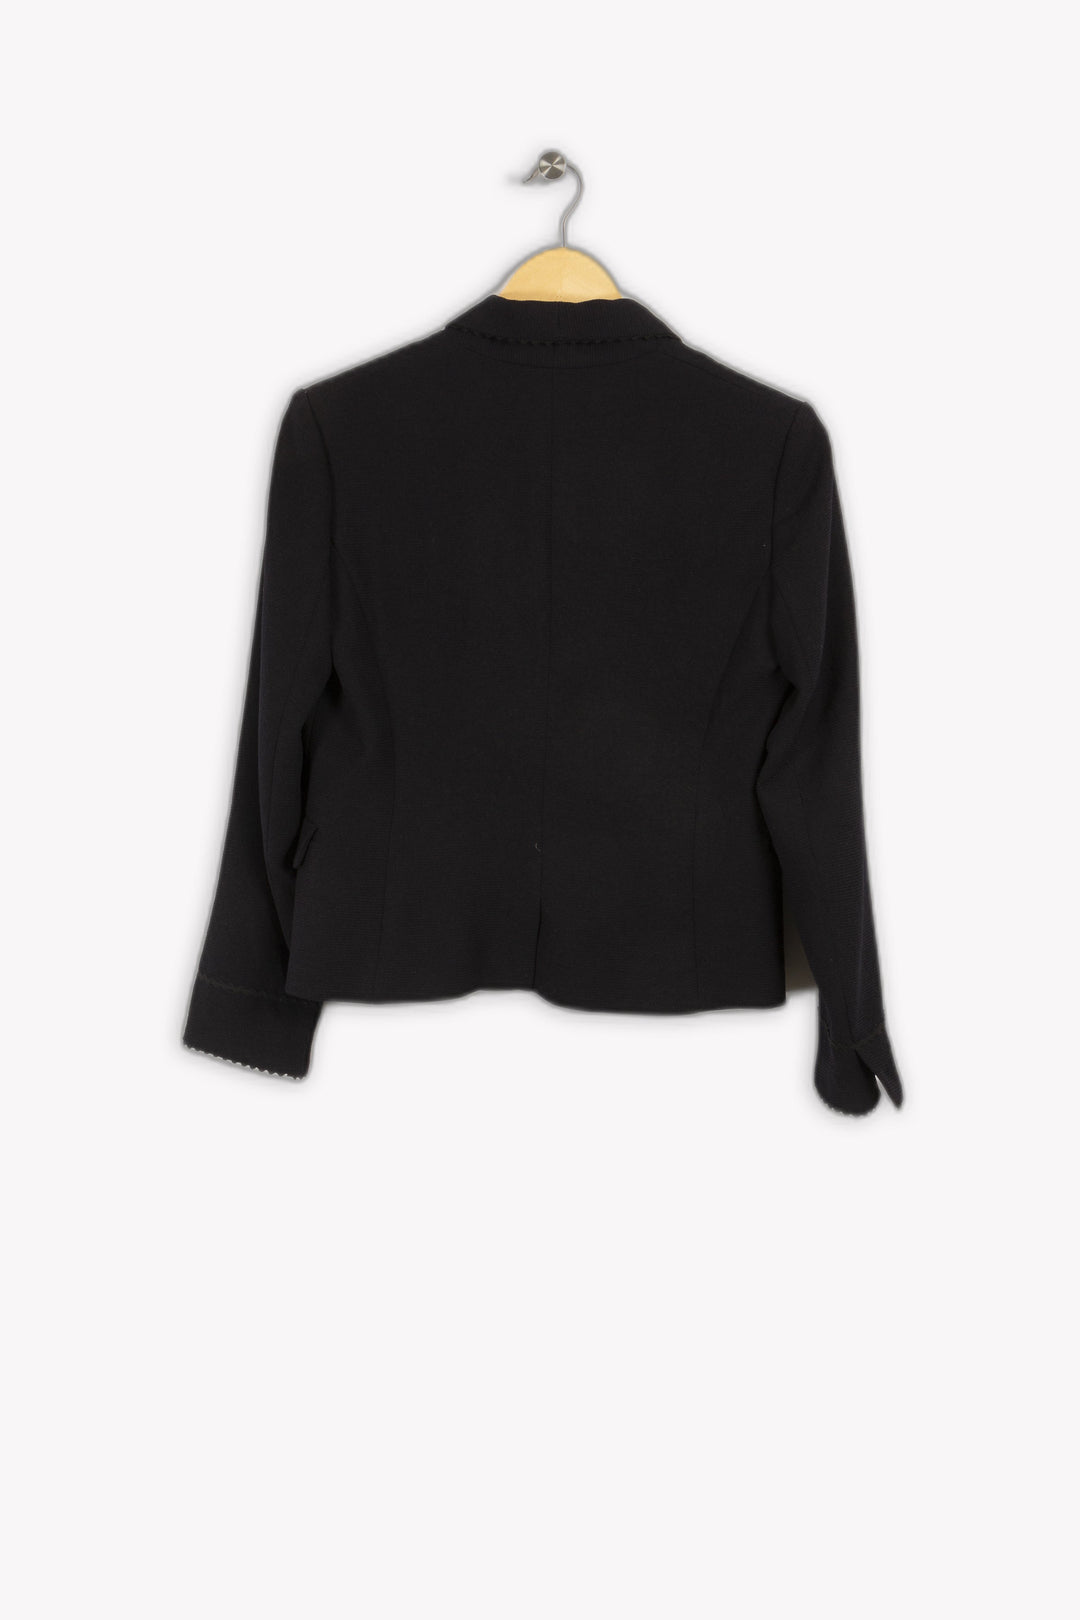 French black short jacket - S / 36